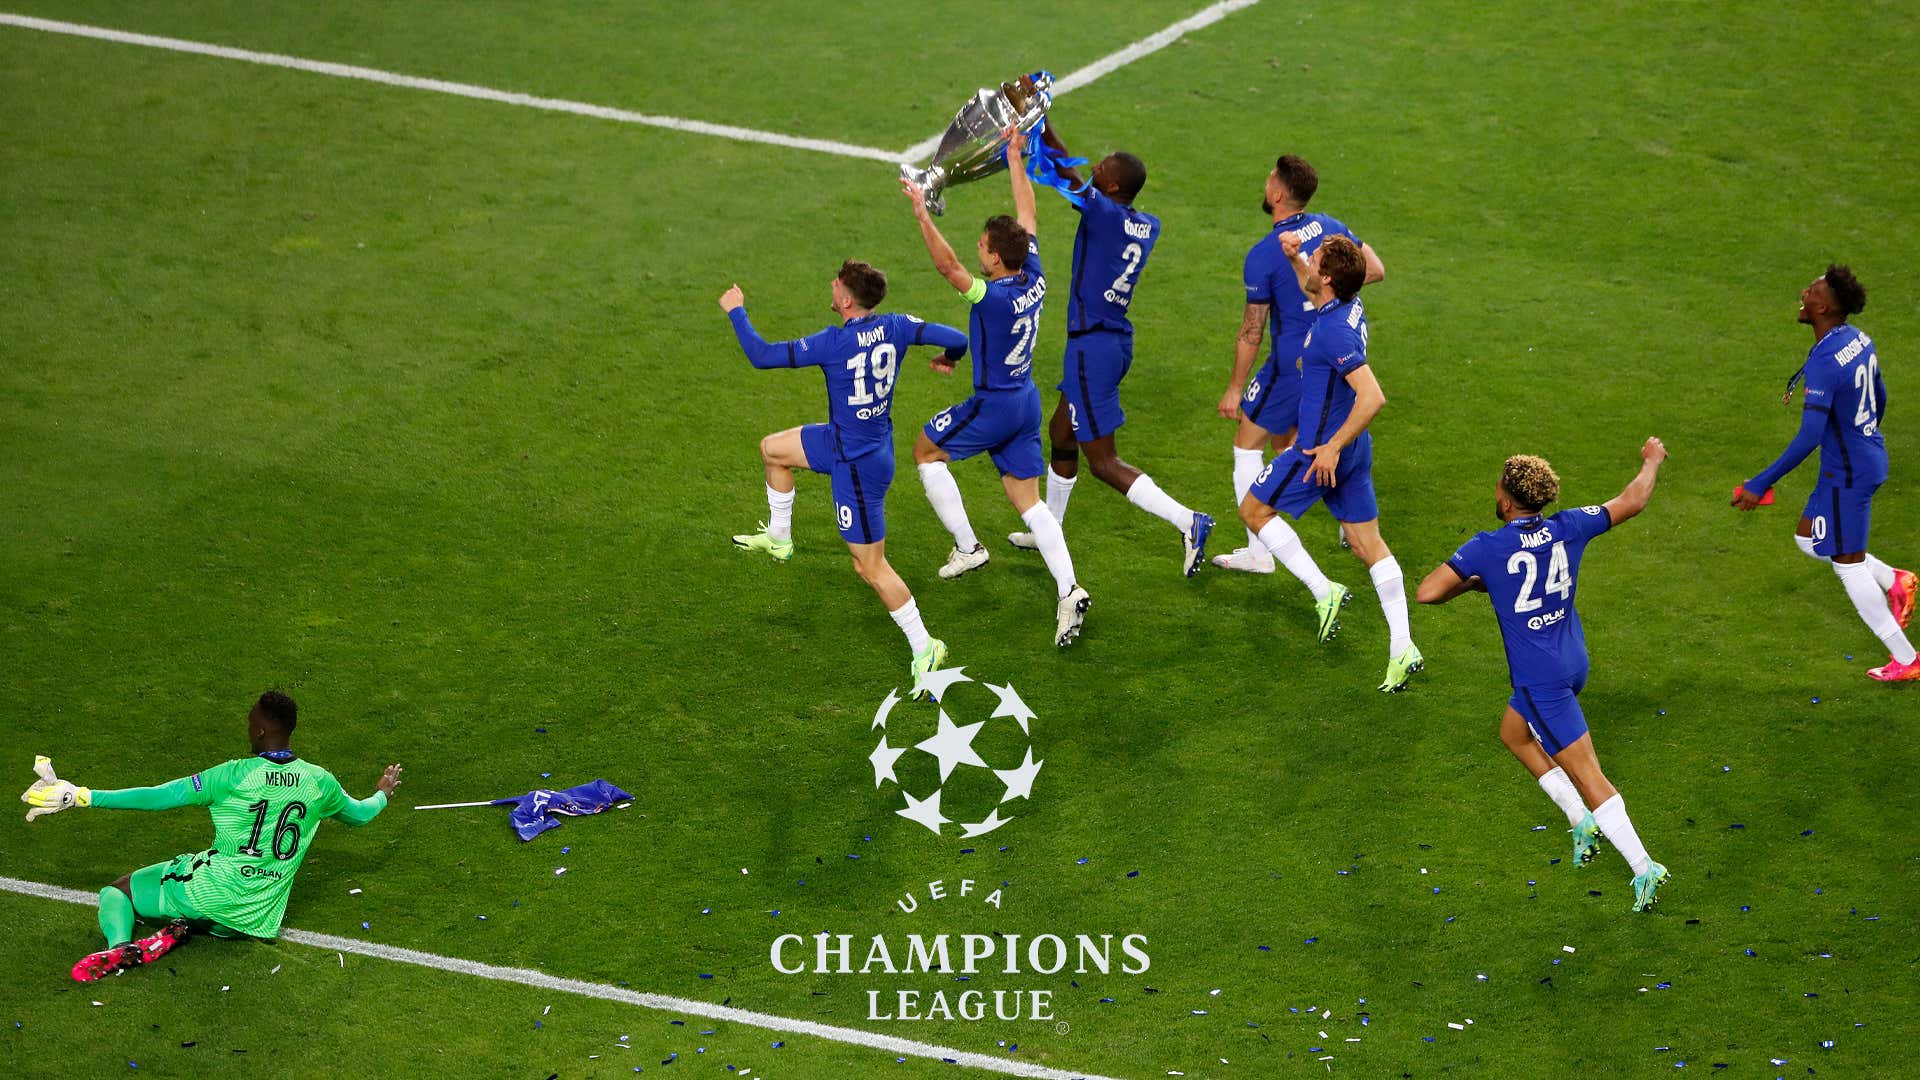 FC Chelsea champions league gewinn titel triumph jubel feiern gfx